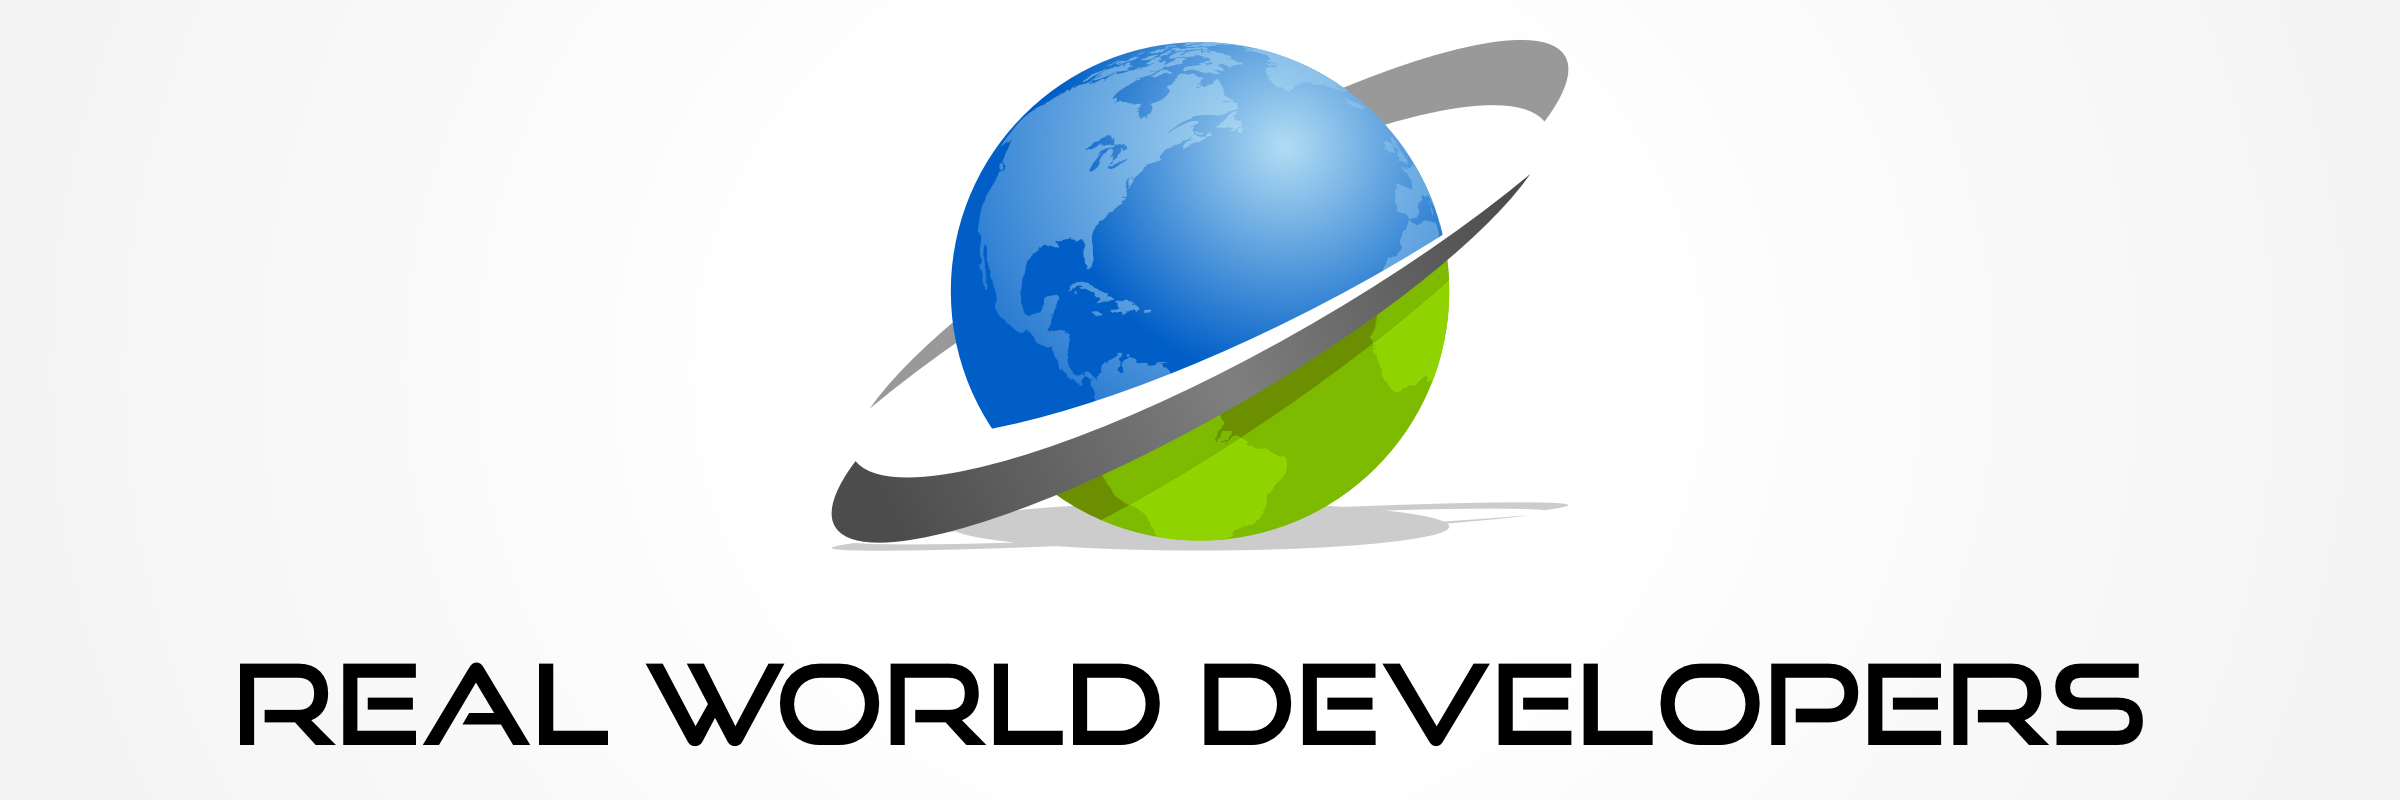 Real World Developers Logo